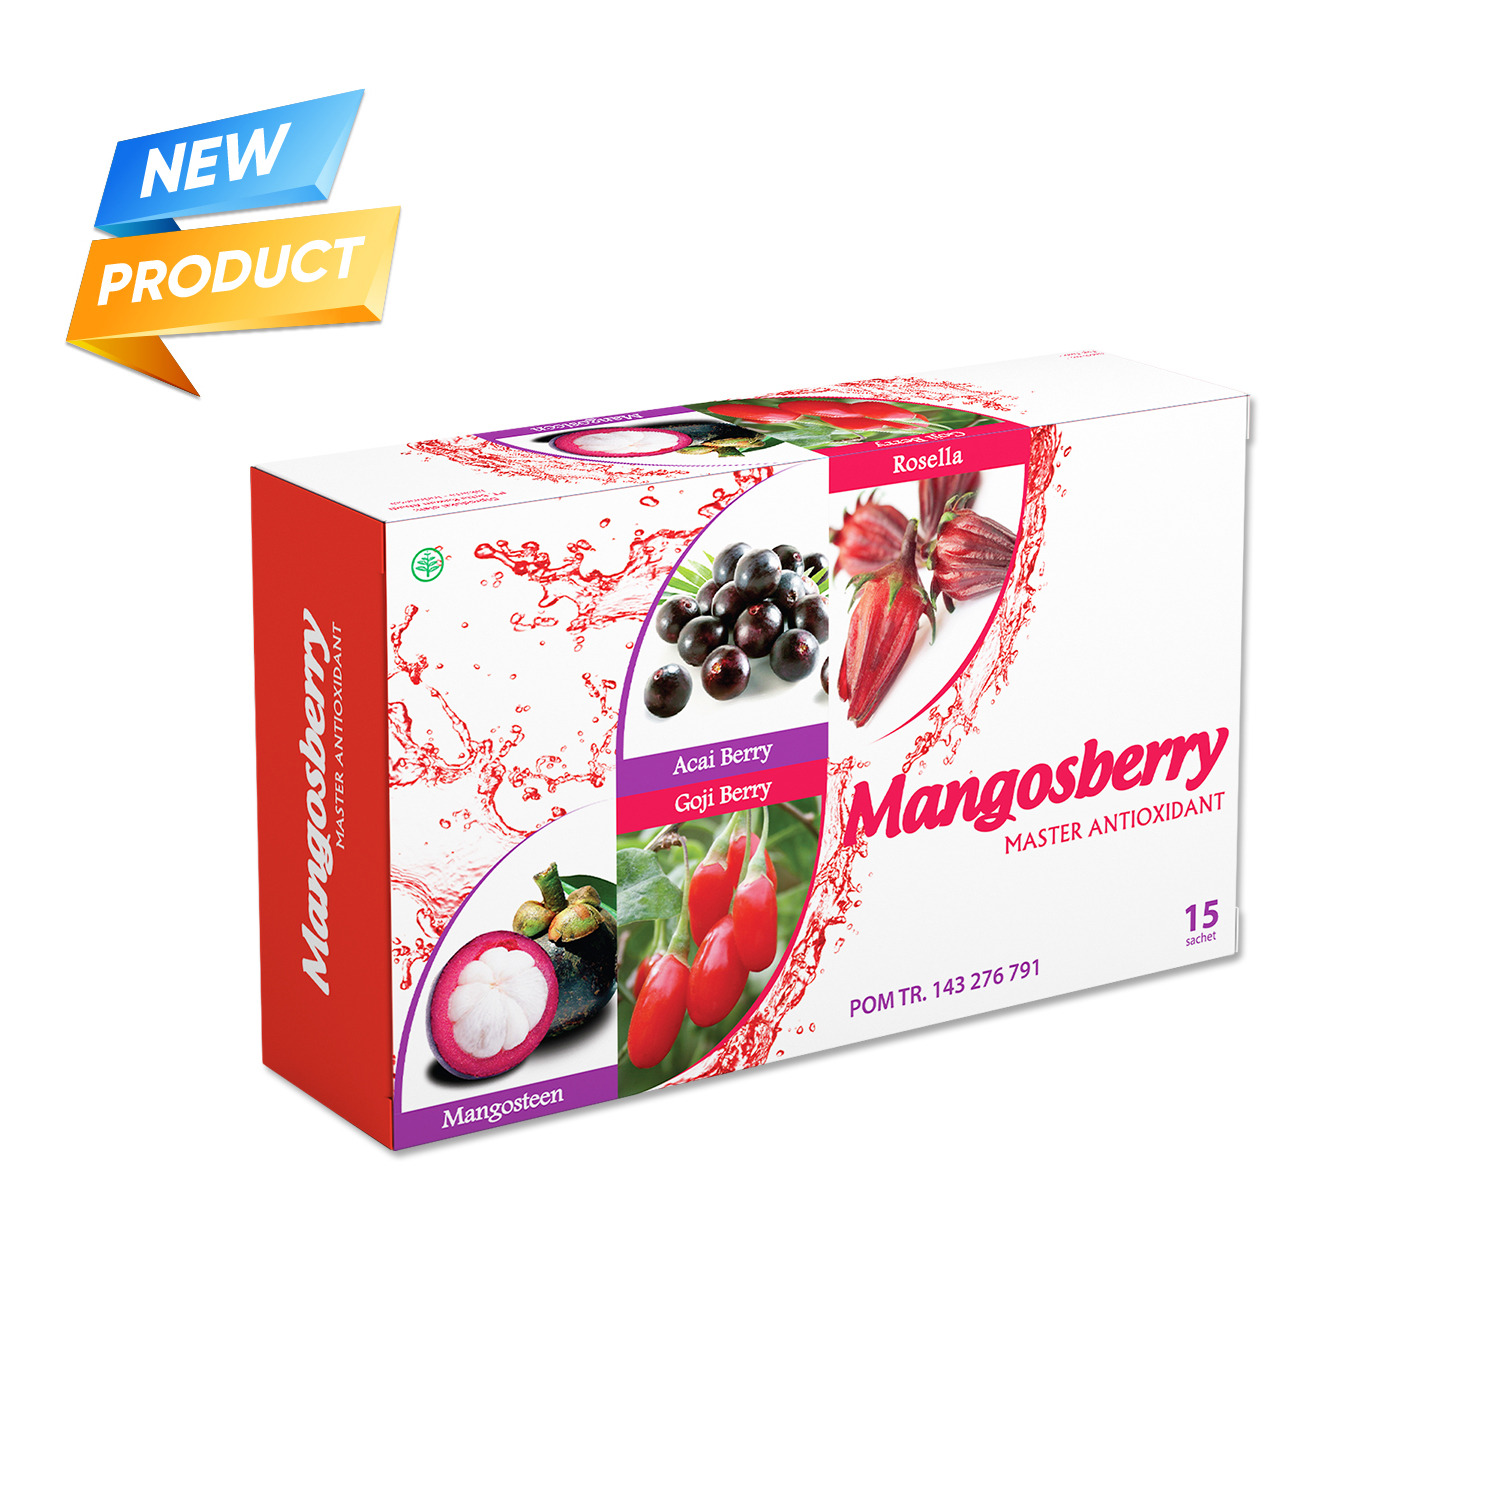 Mangosberry